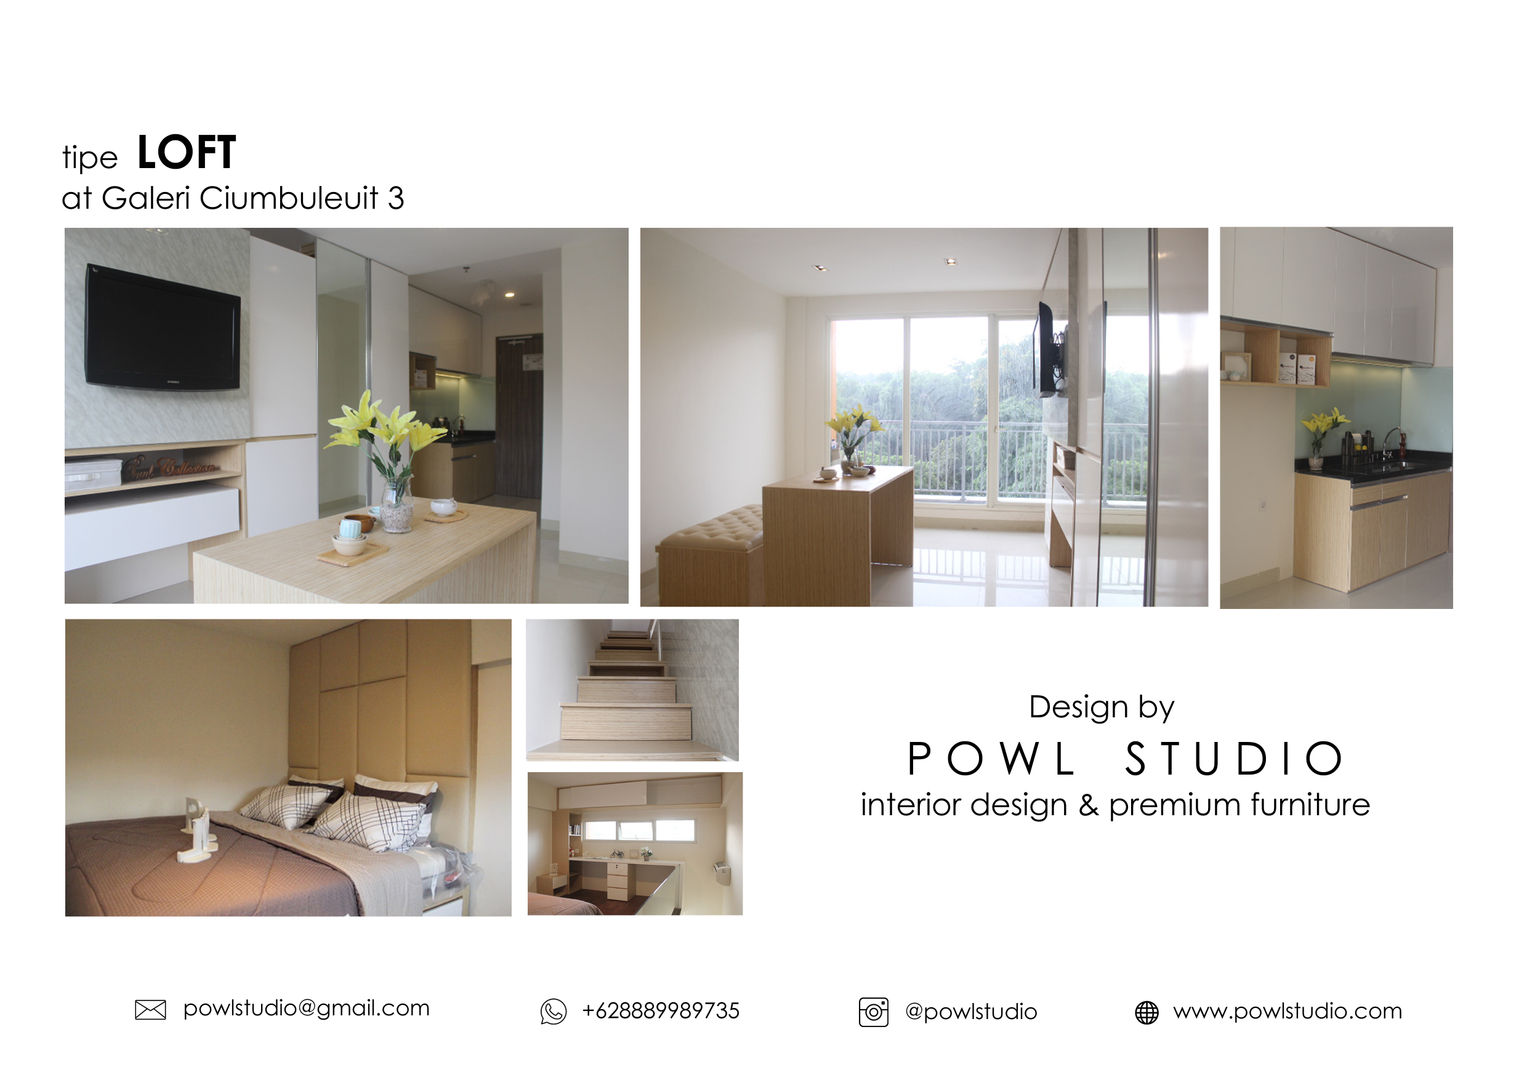 Galeri Ciumbuleuit III - Tipe Loft, POWL Studio POWL Studio